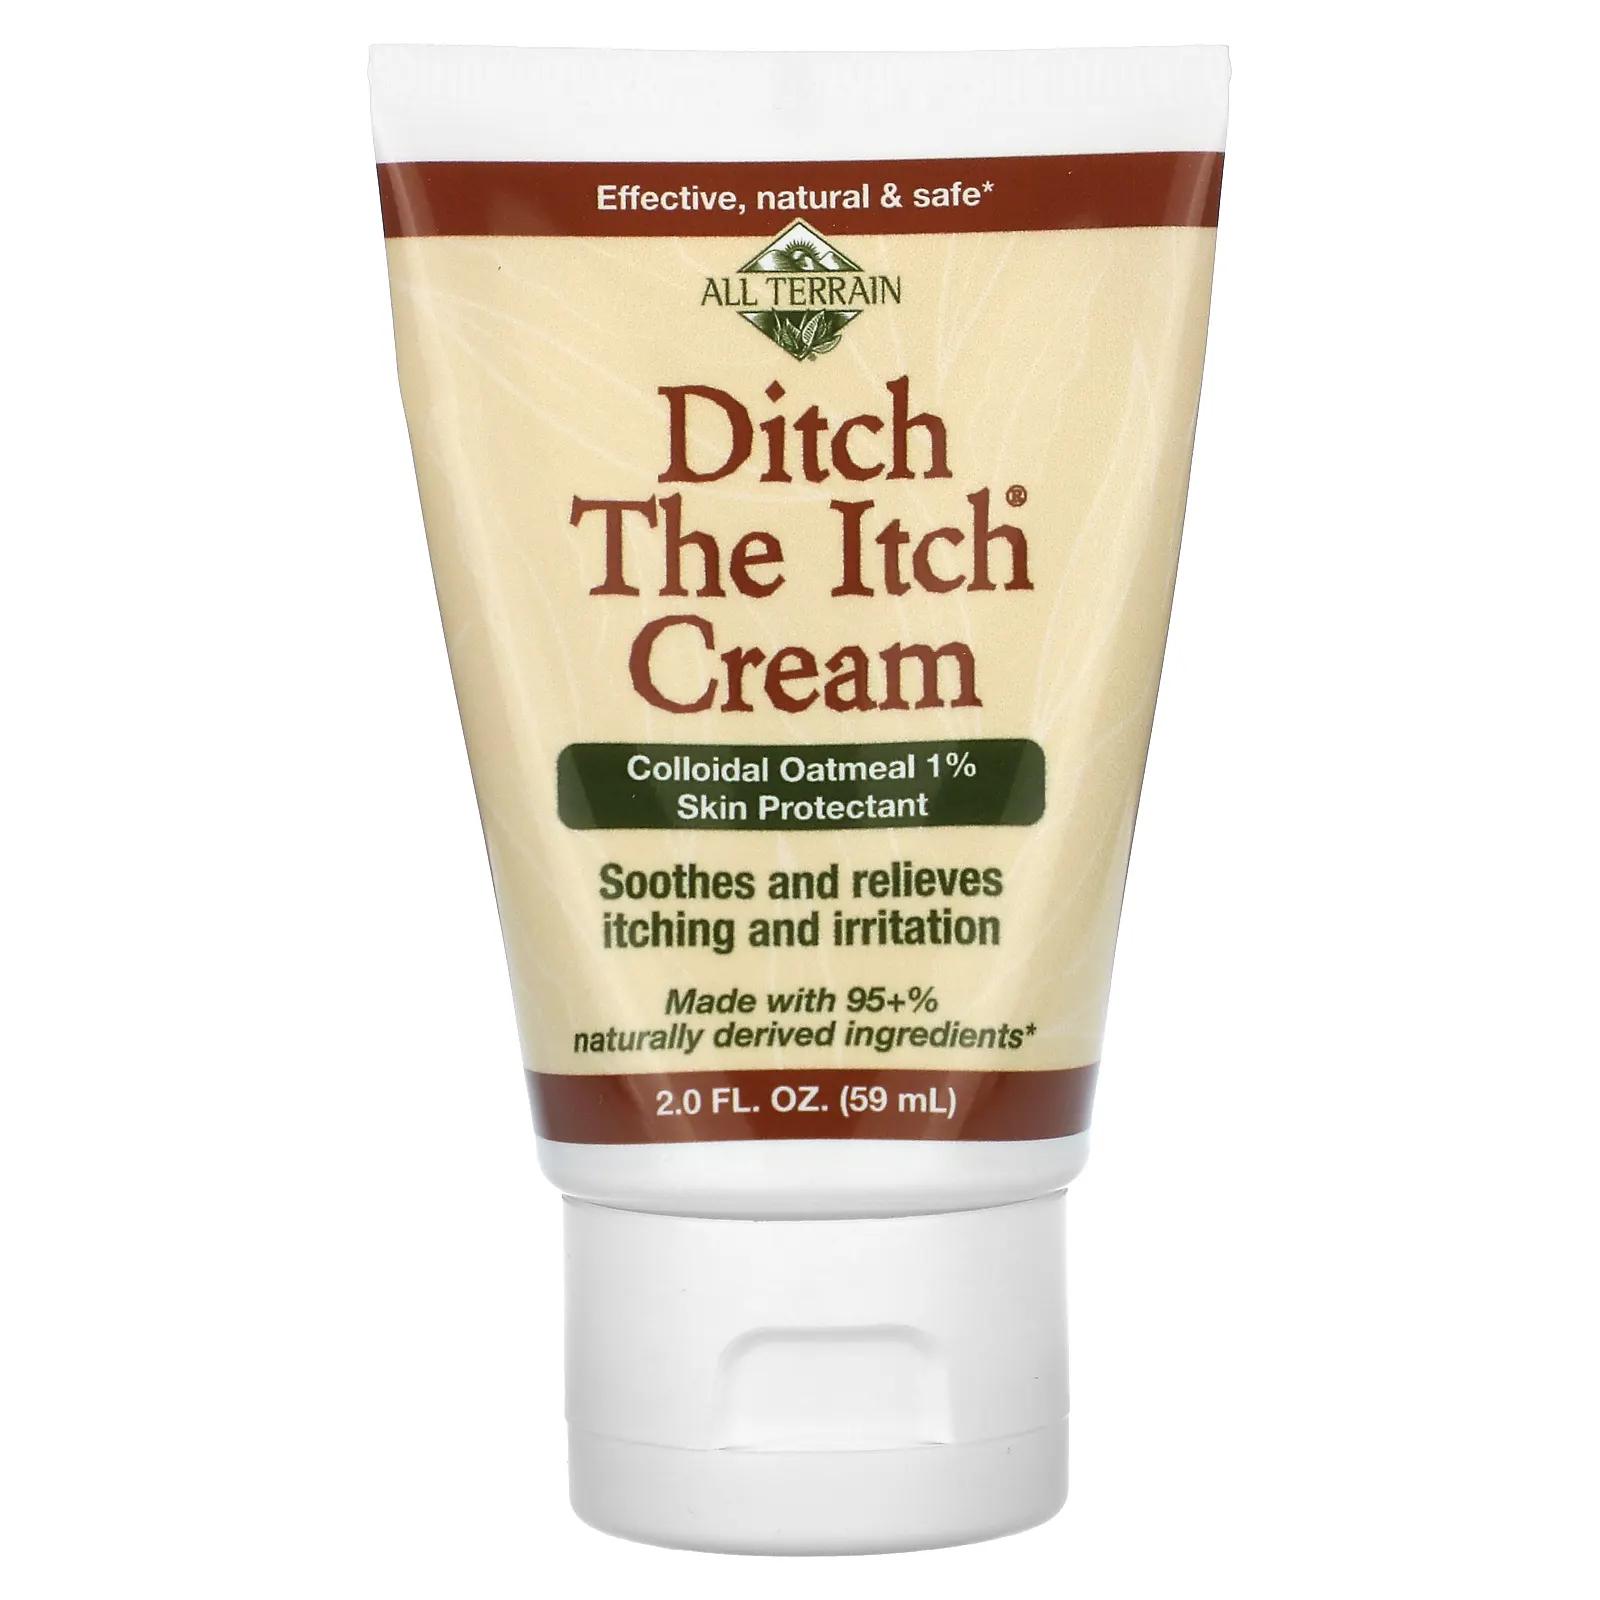 All Terrain Ditch The Itch Cream крем для защиты кожи с коллоидной овсянкой 1% 59 мл (2 жидк. унции) all terrain ditch the itch cream крем для защиты кожи с коллоидной овсянкой 1% 59 мл 2 жидк унции